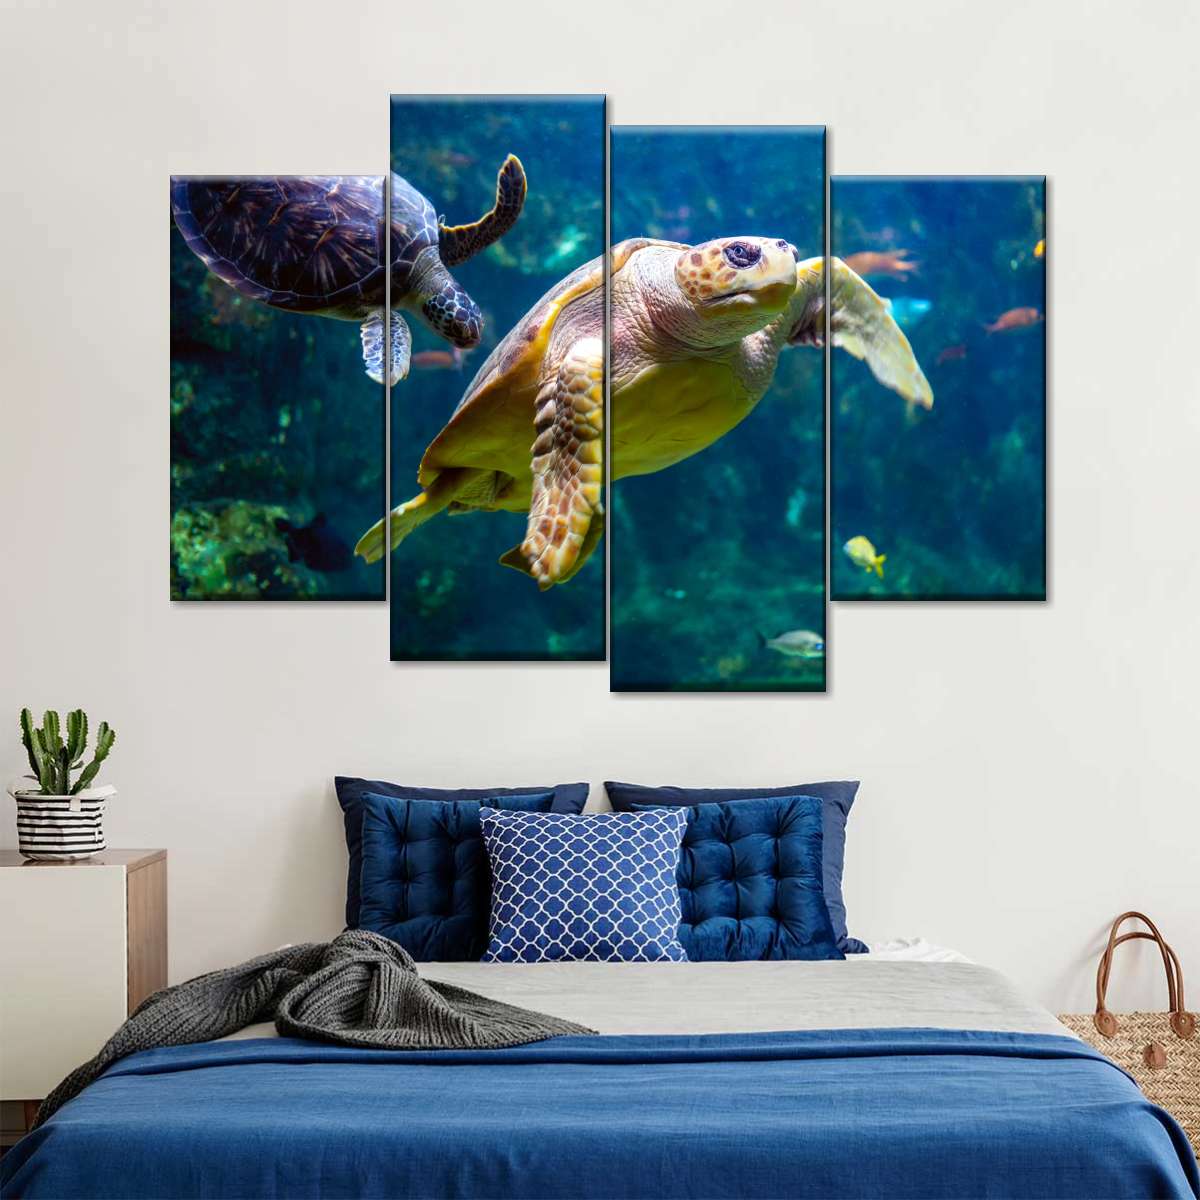 Underwater Sea Turtles Wall Art: Canvas Prints, Art Prints